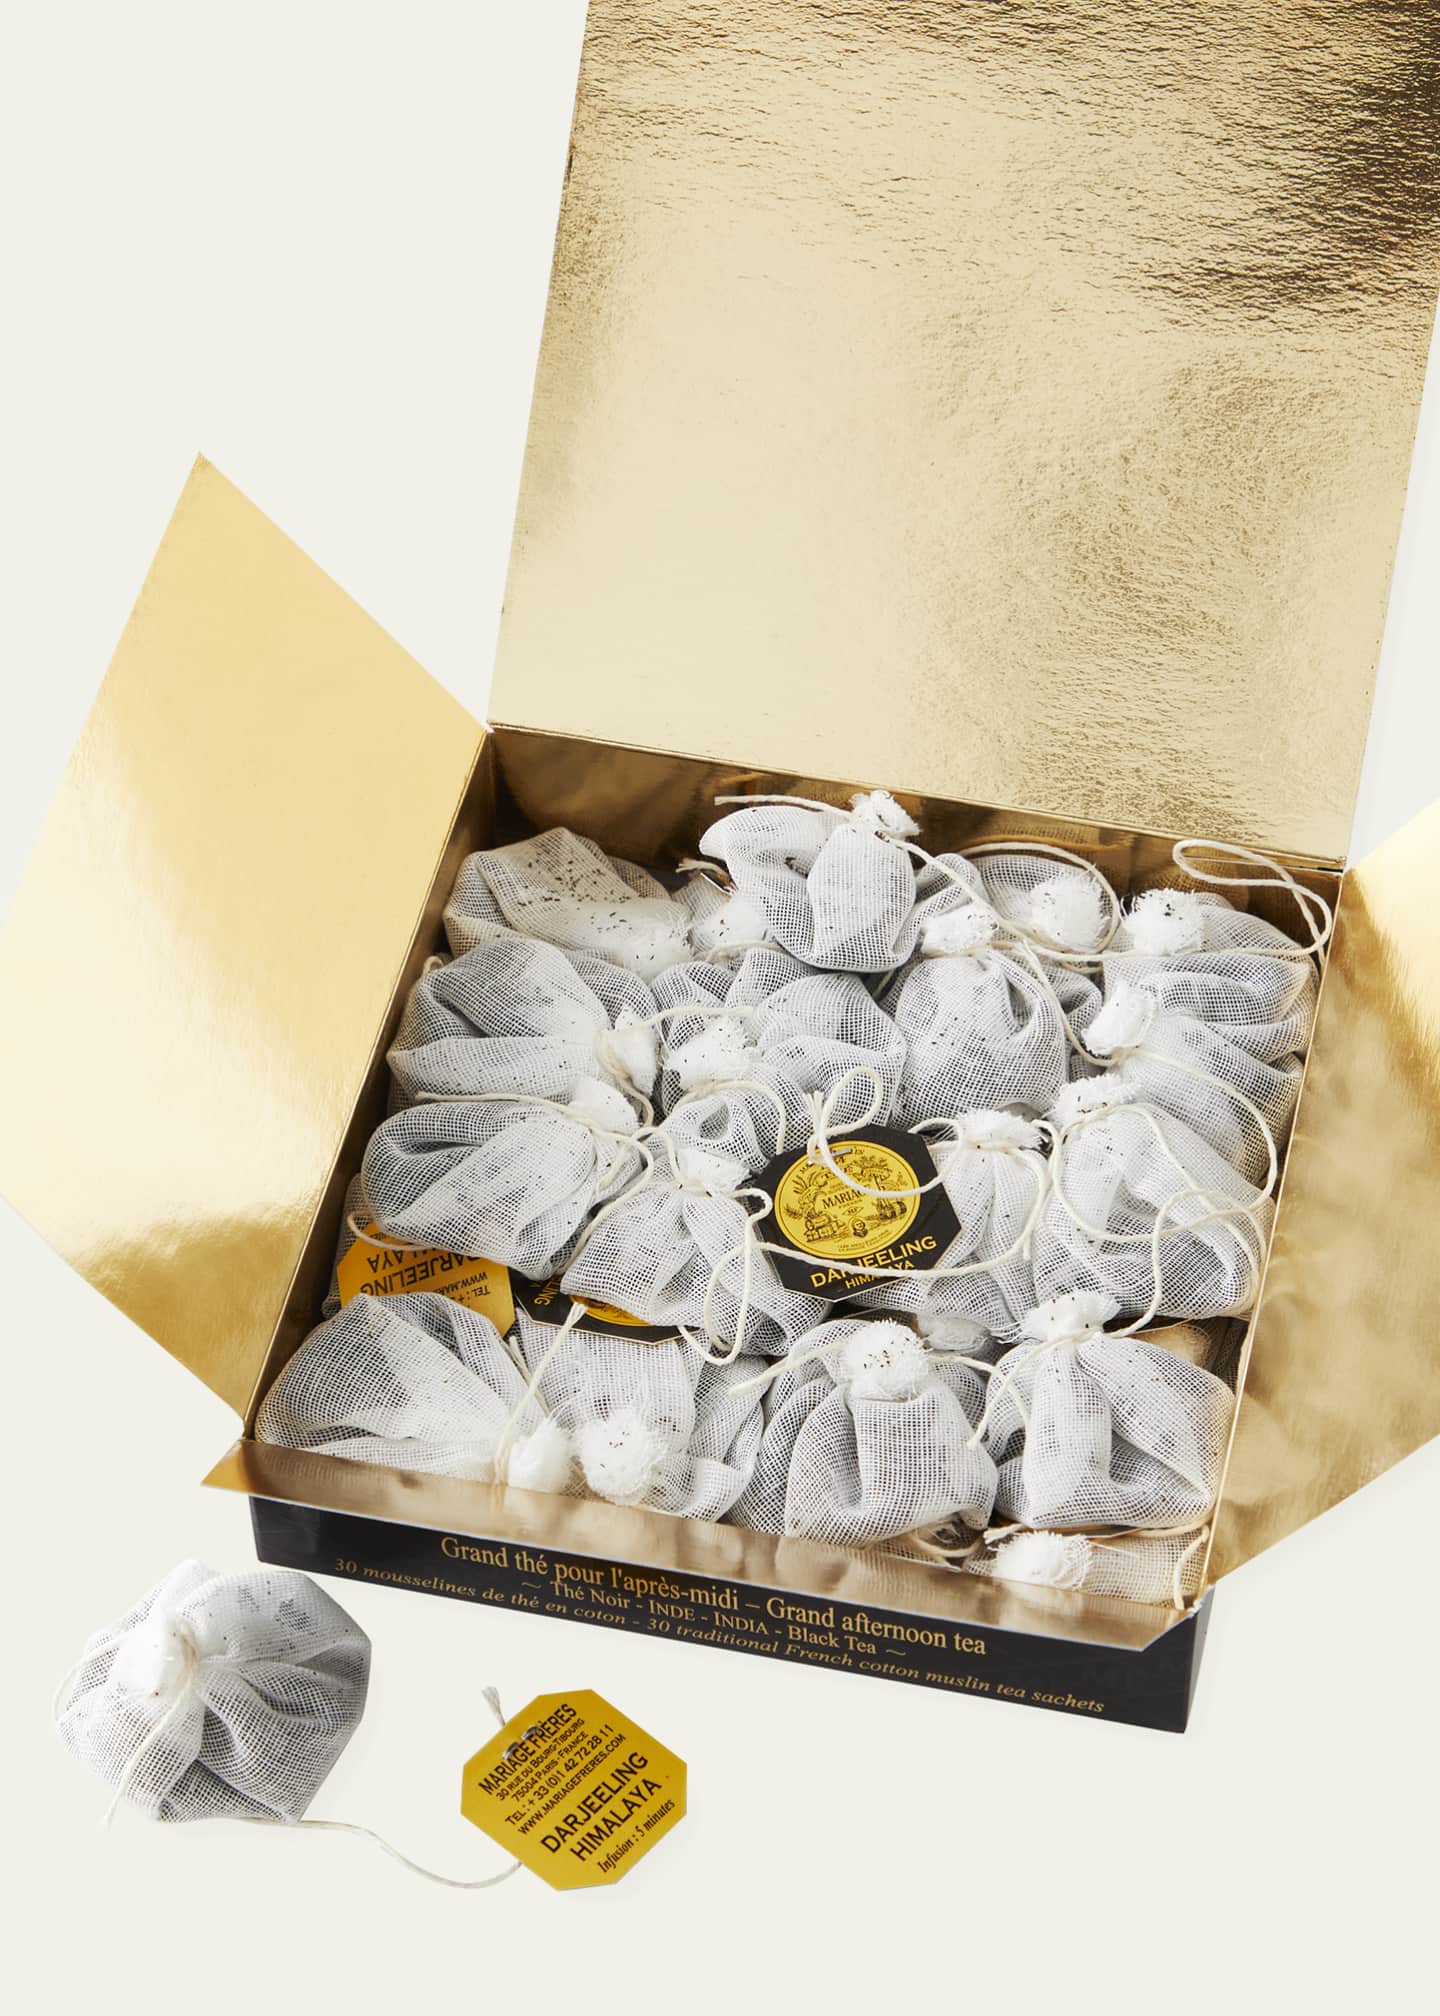 Mariage Freres International Darjeeling Himalaya Tea Bags, 30 Count -  Bergdorf Goodman